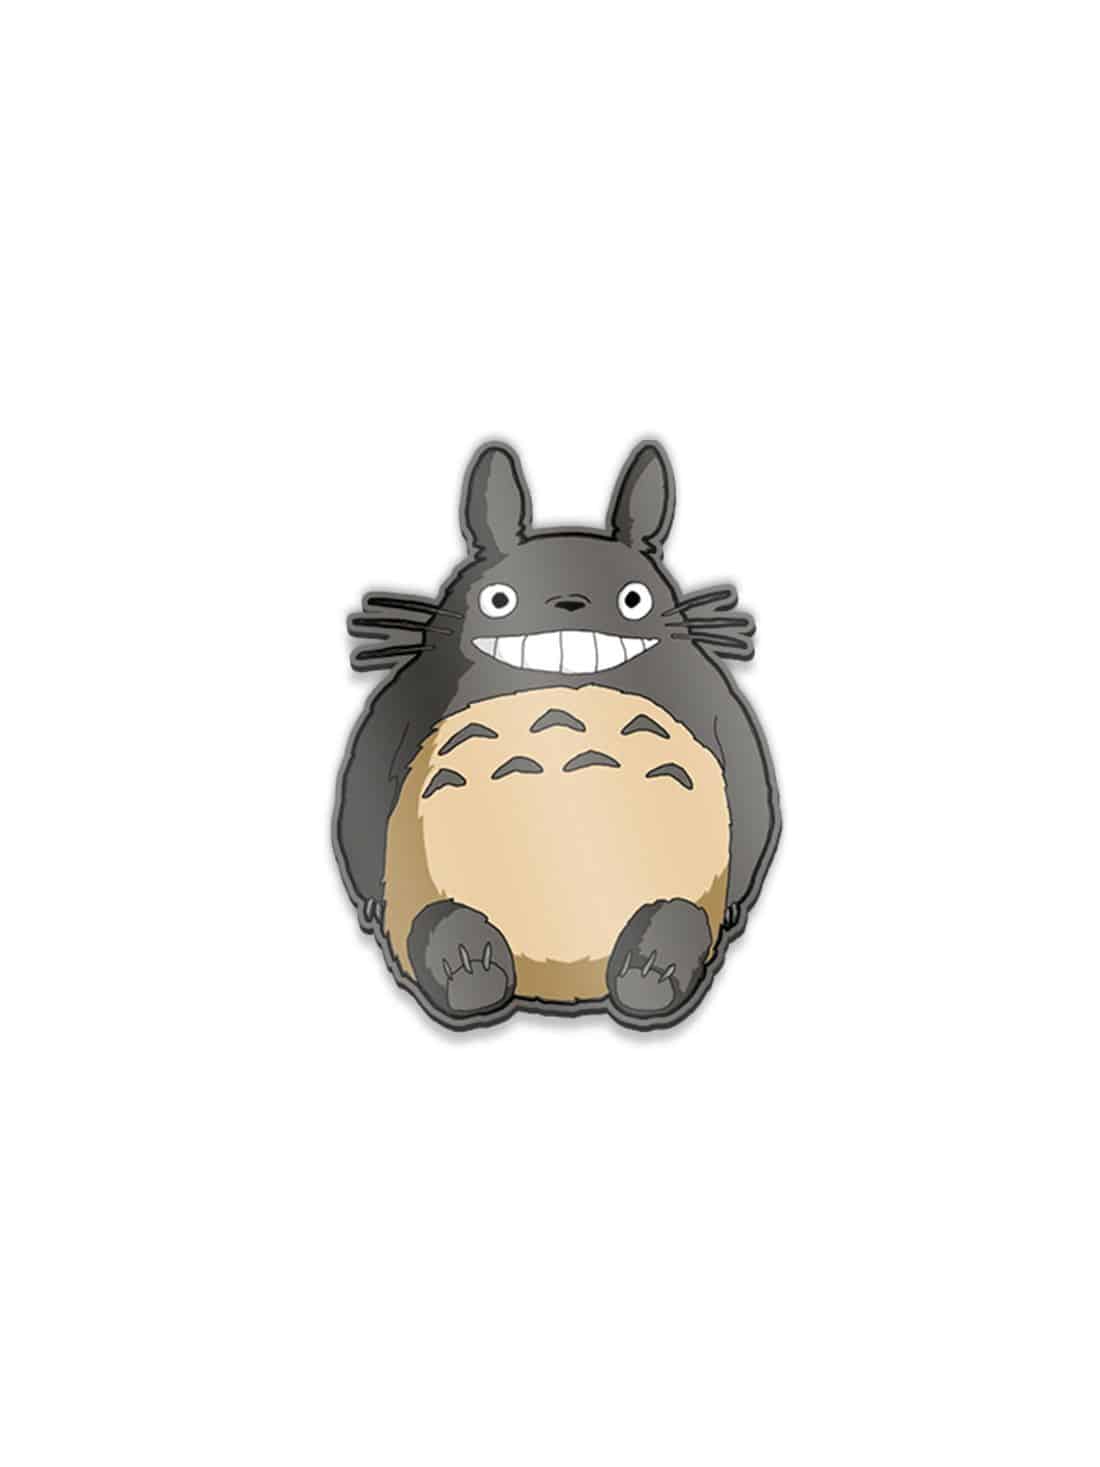 Anime Totoro Pin - ComicSense